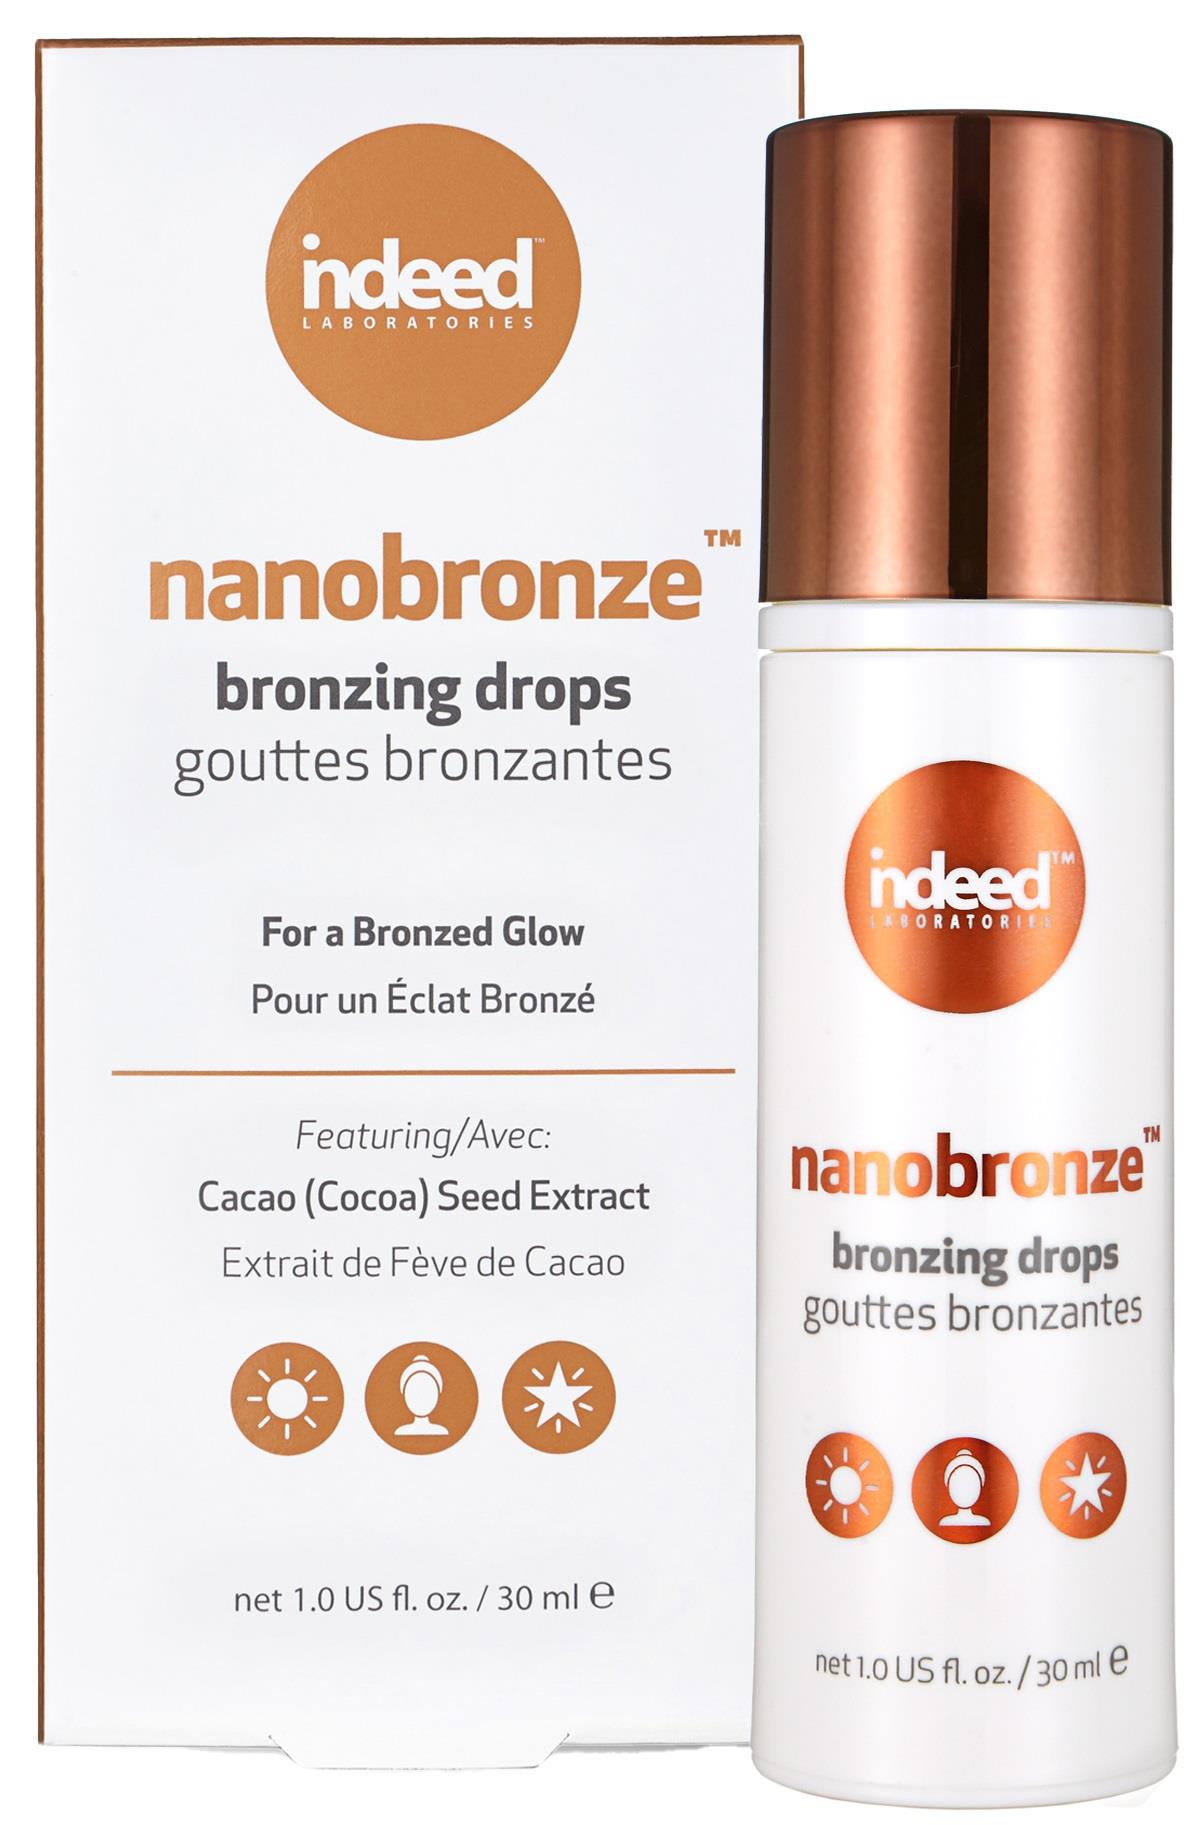 Indeed Laboratories Nanobronze Bronzing Drops 30 ml